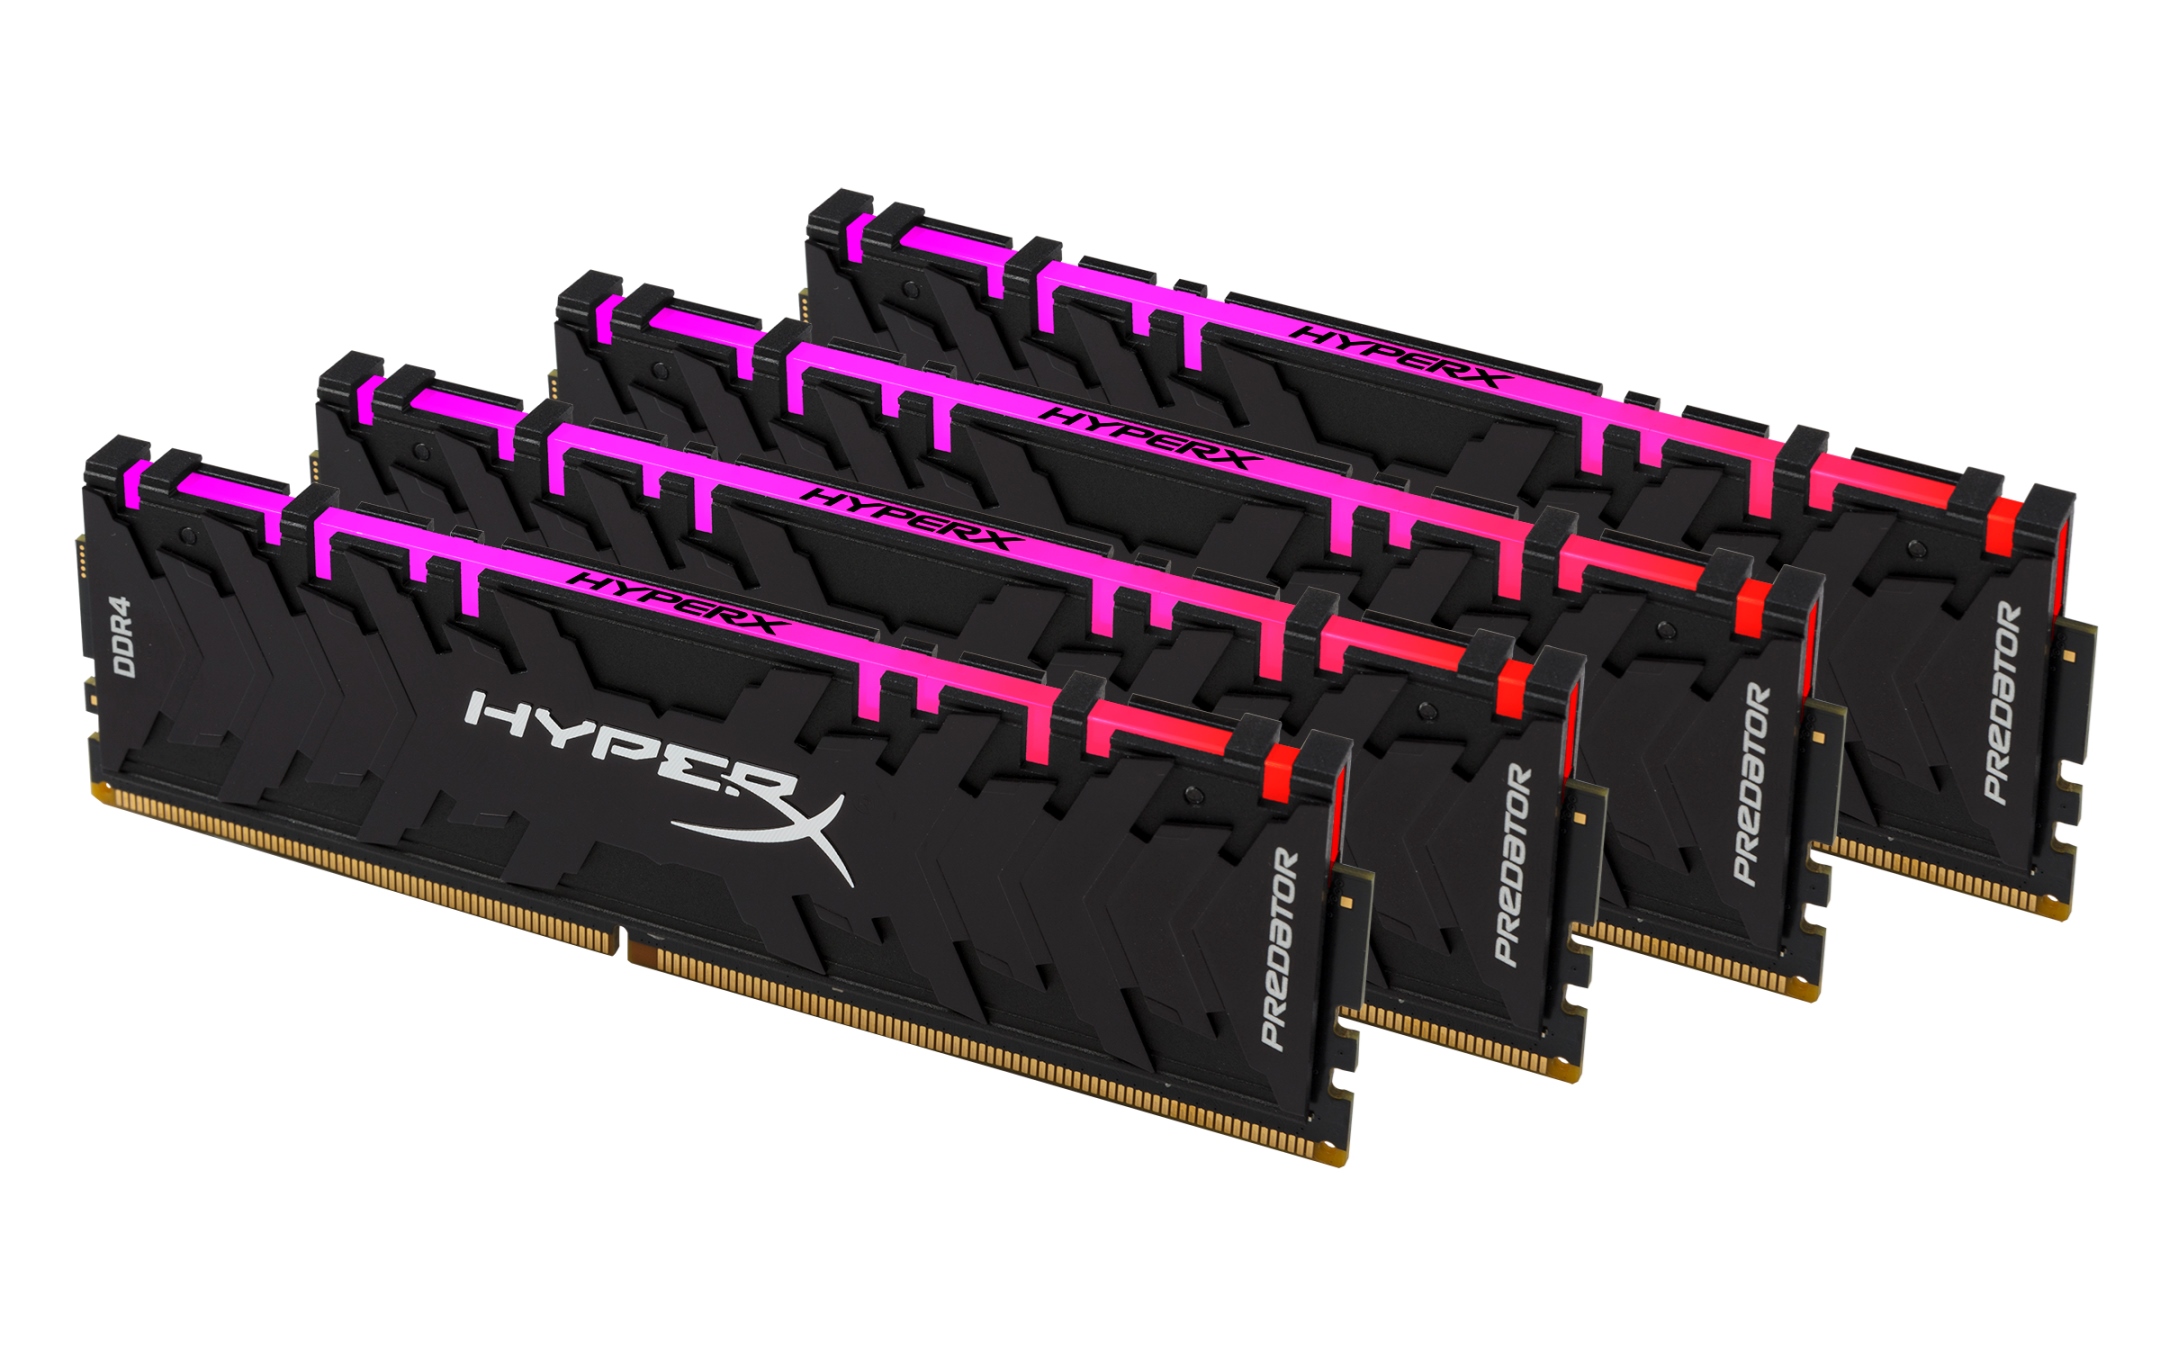 HyperX Predator DDR4 RGB Memory.jpg